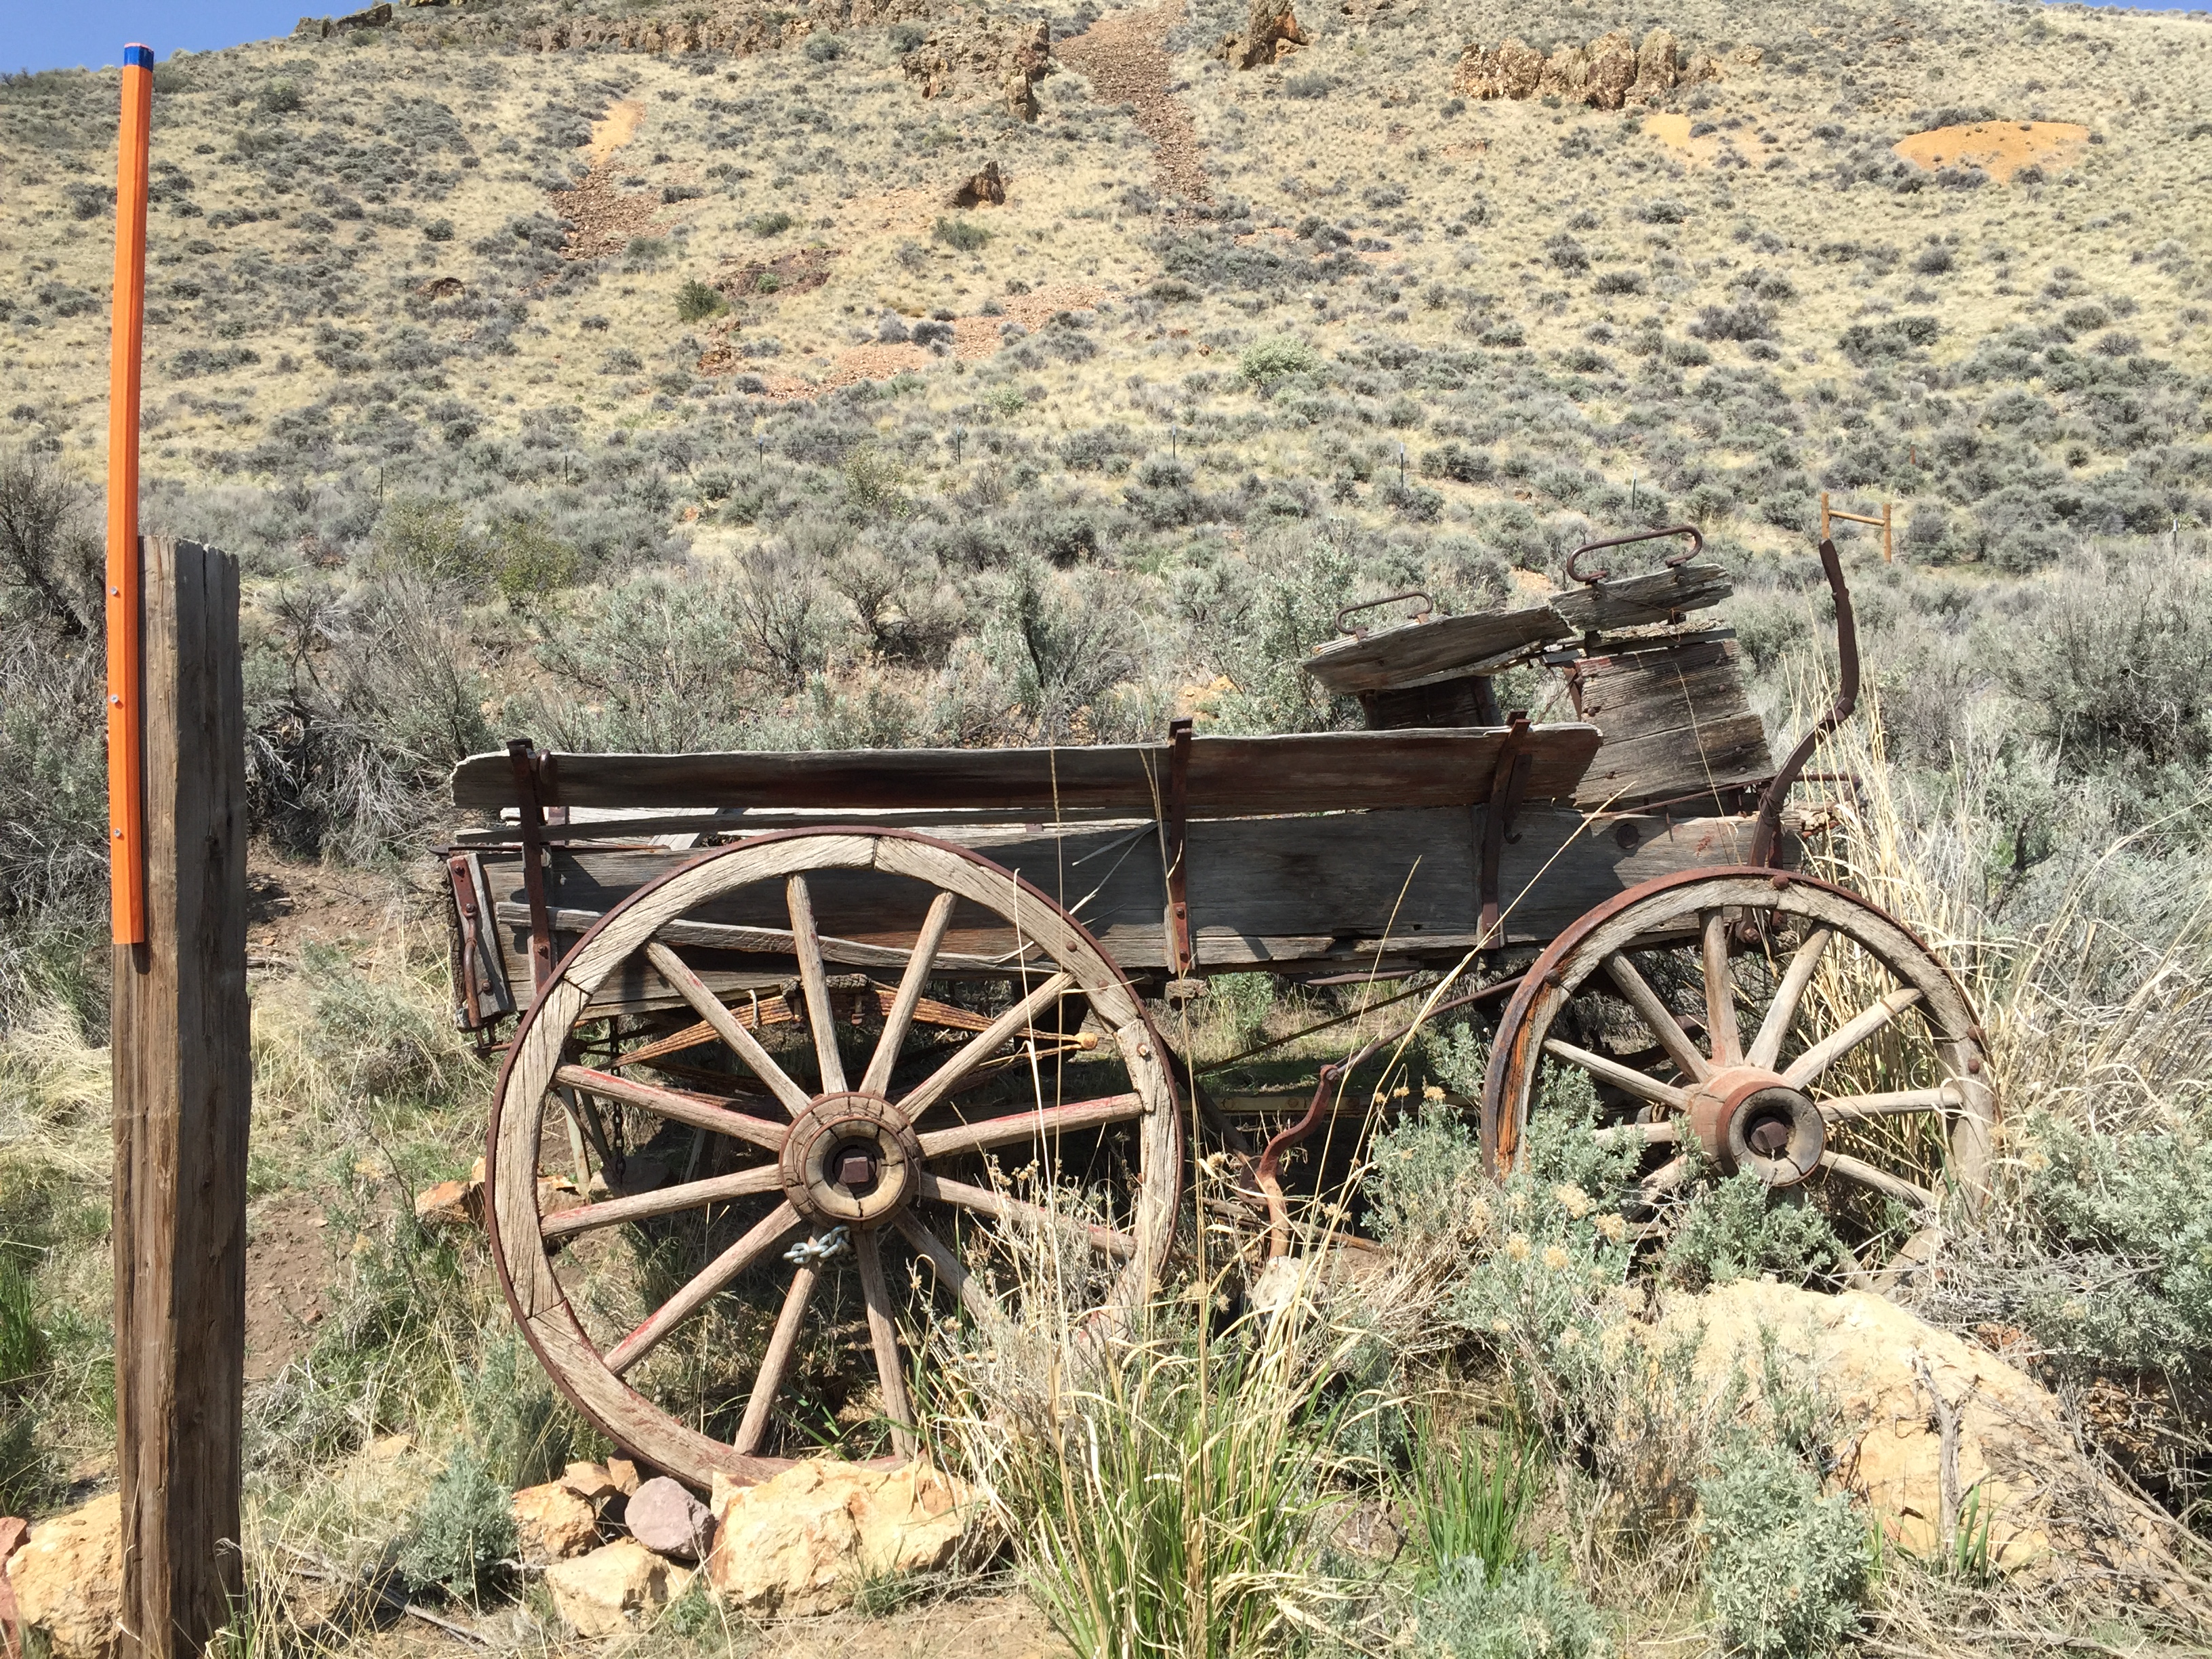 File:2015-04-20 14 34 17 Old cart in Midas, Nevada.jpg - Wikimedia ...